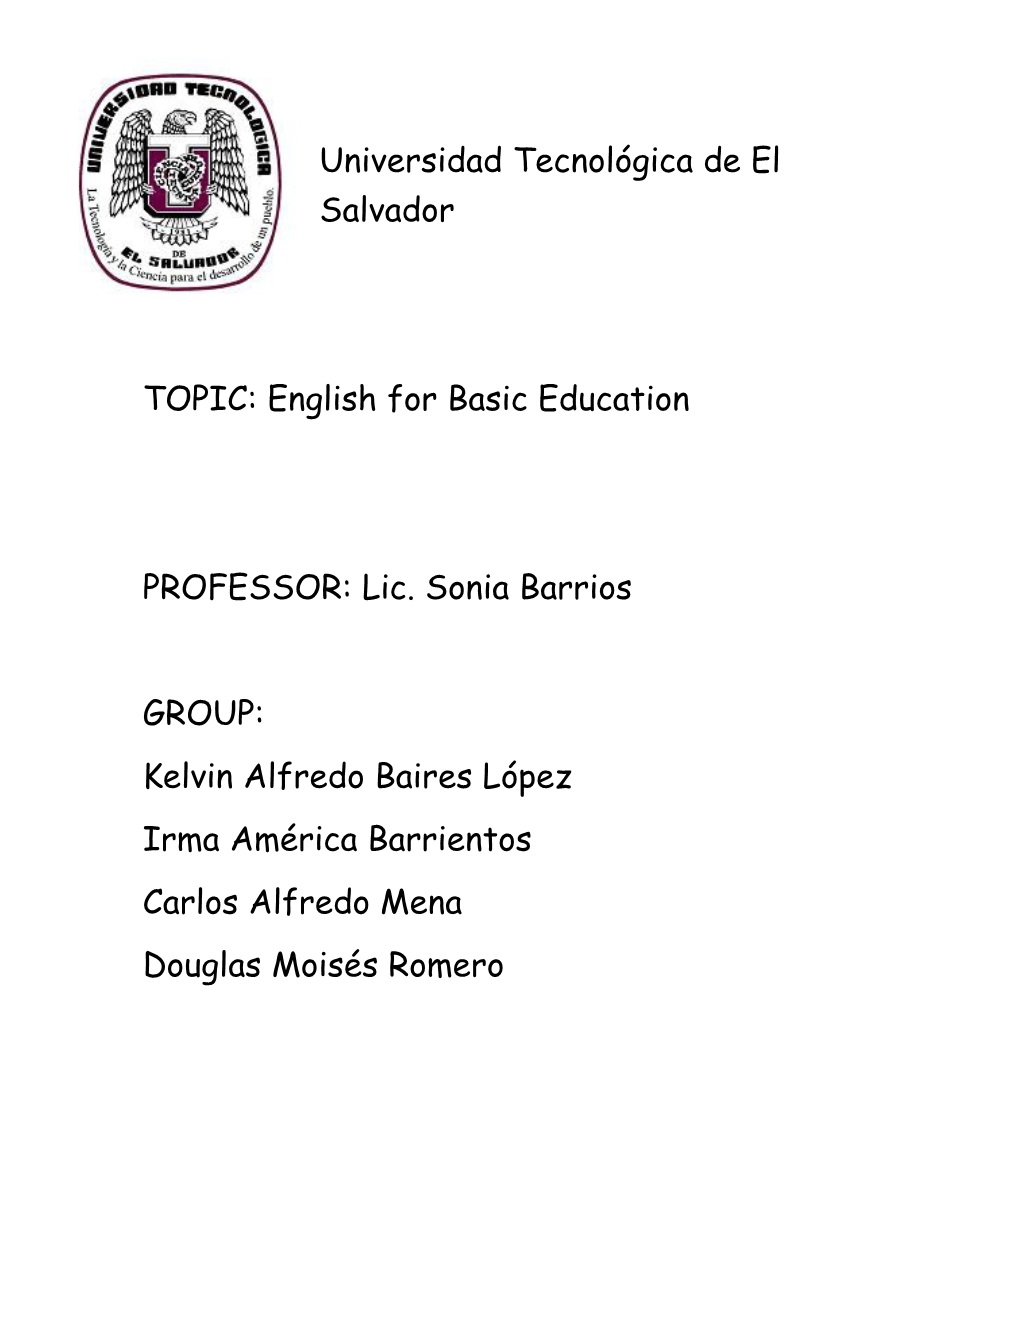 TOPIC: English for Basic Education